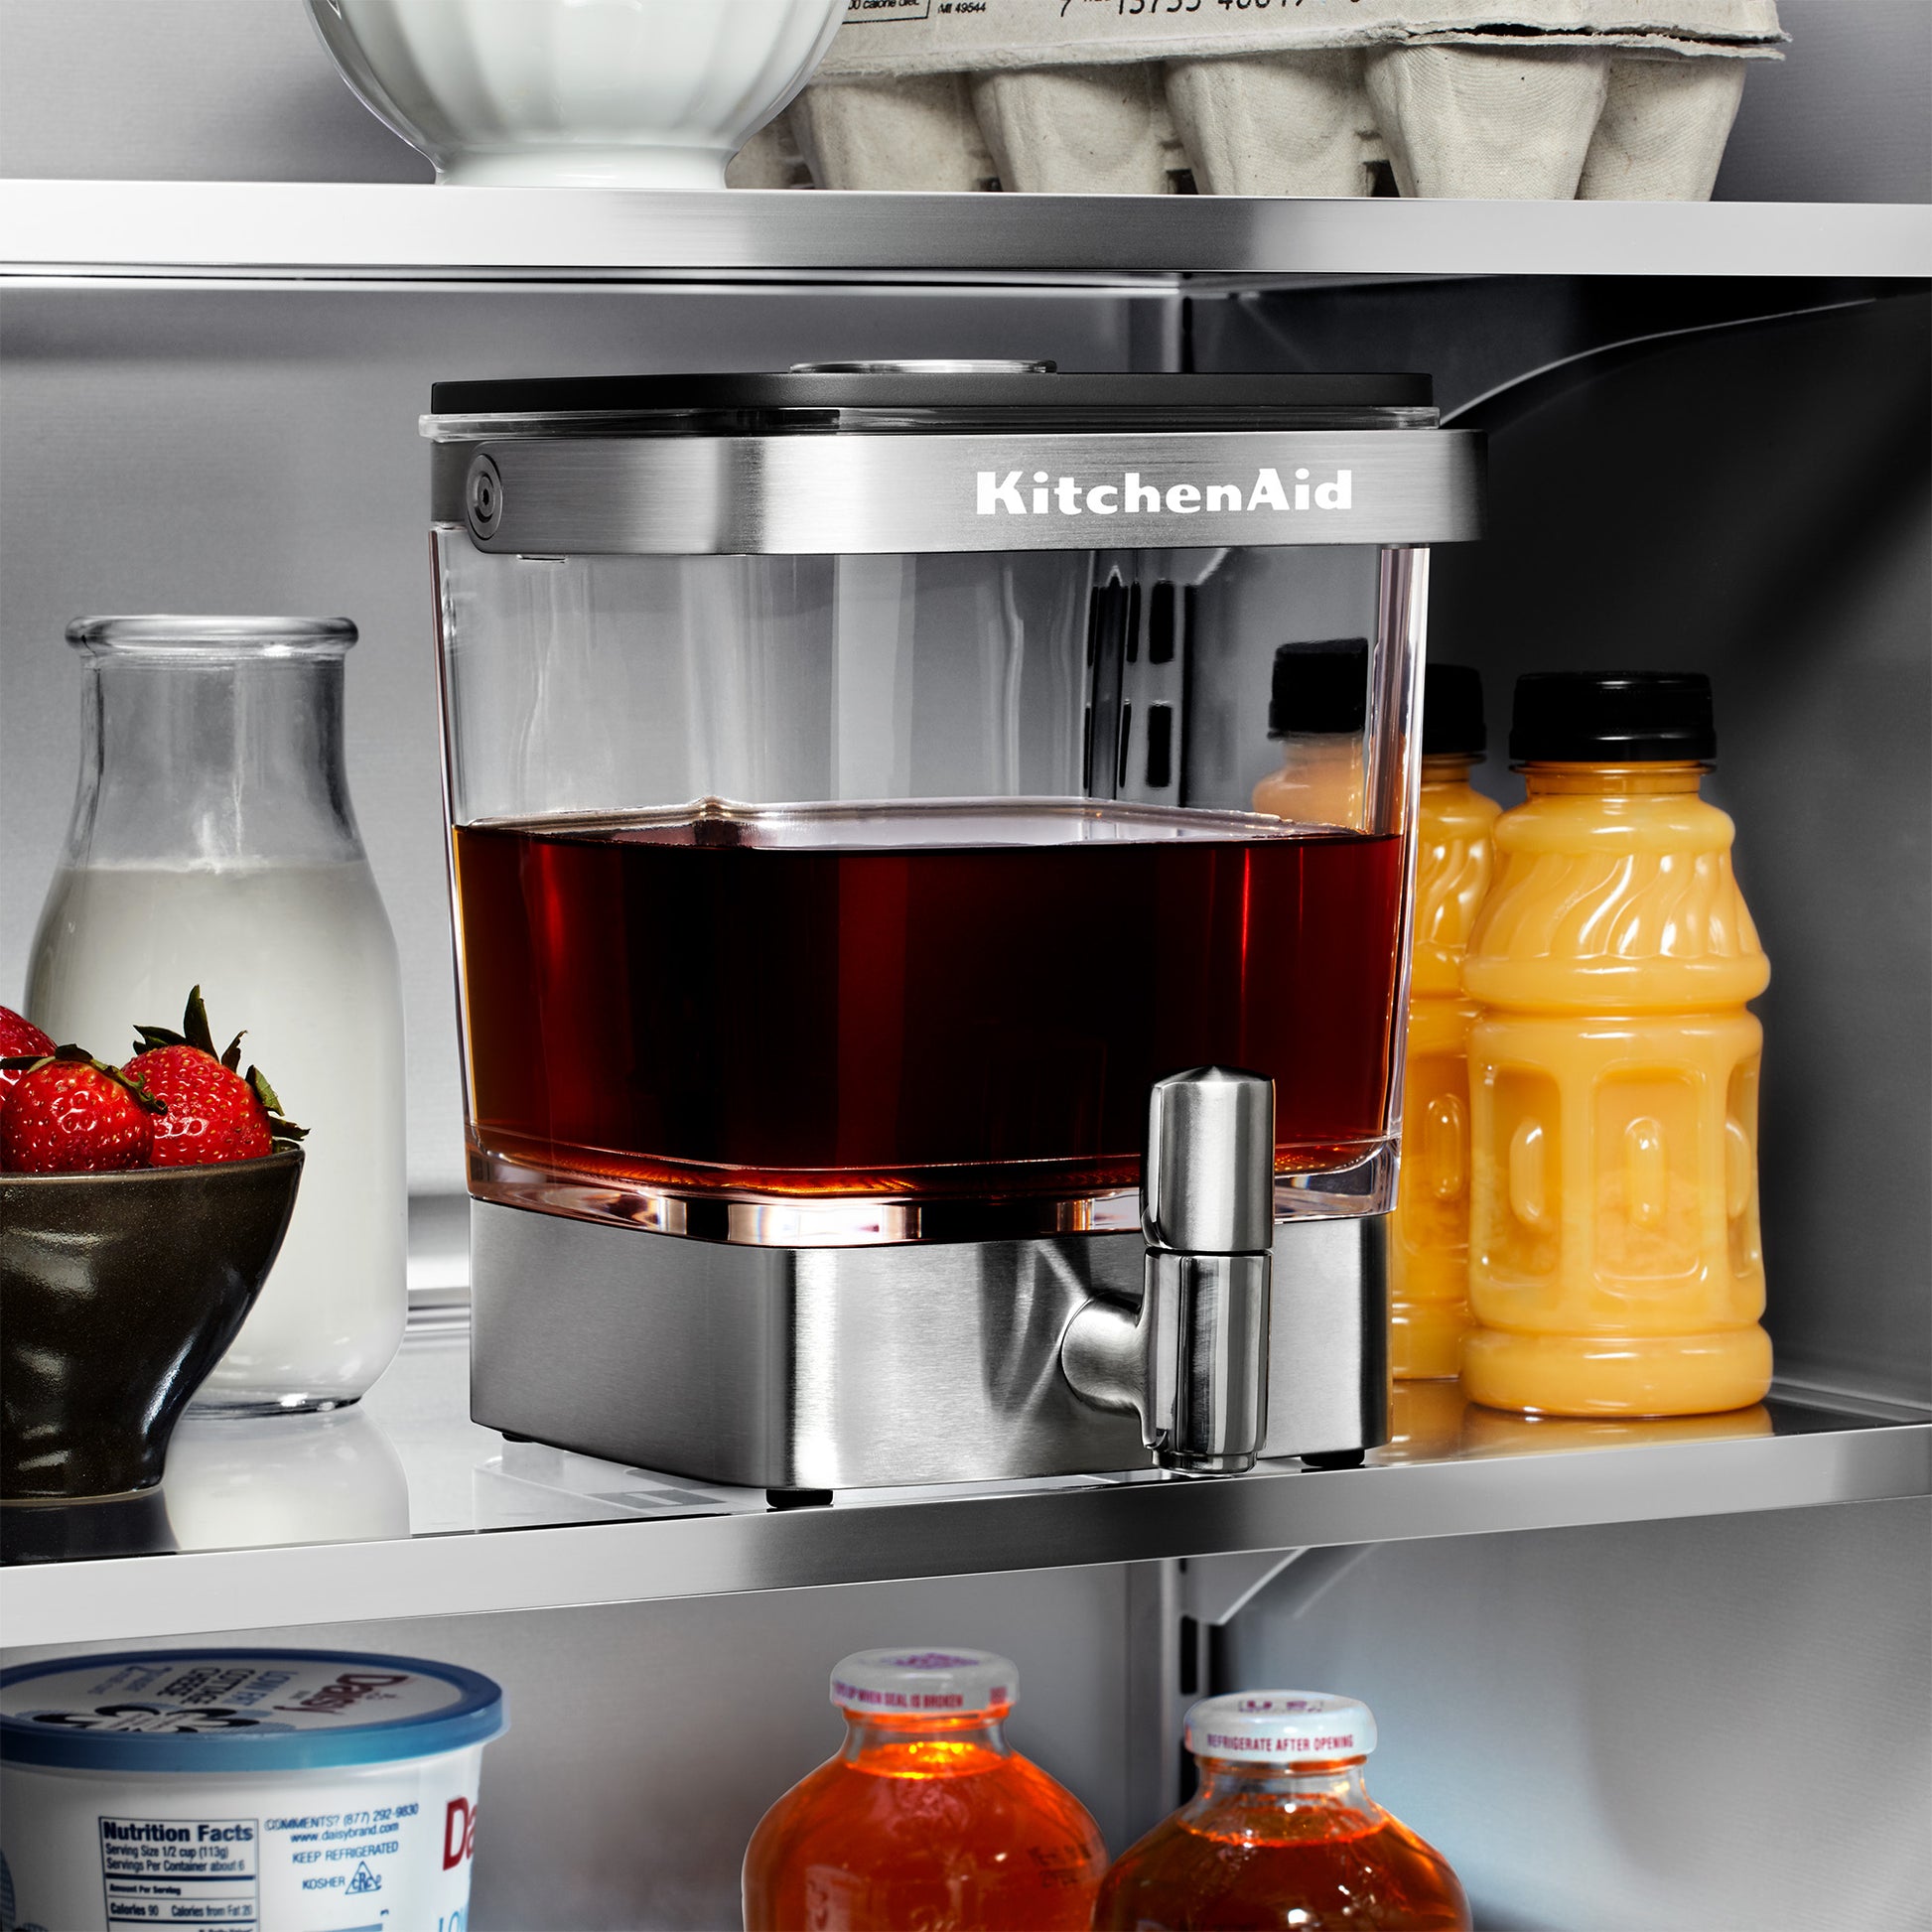 KitchenAid® KCM4212SX Cold Brew Coffee Maker